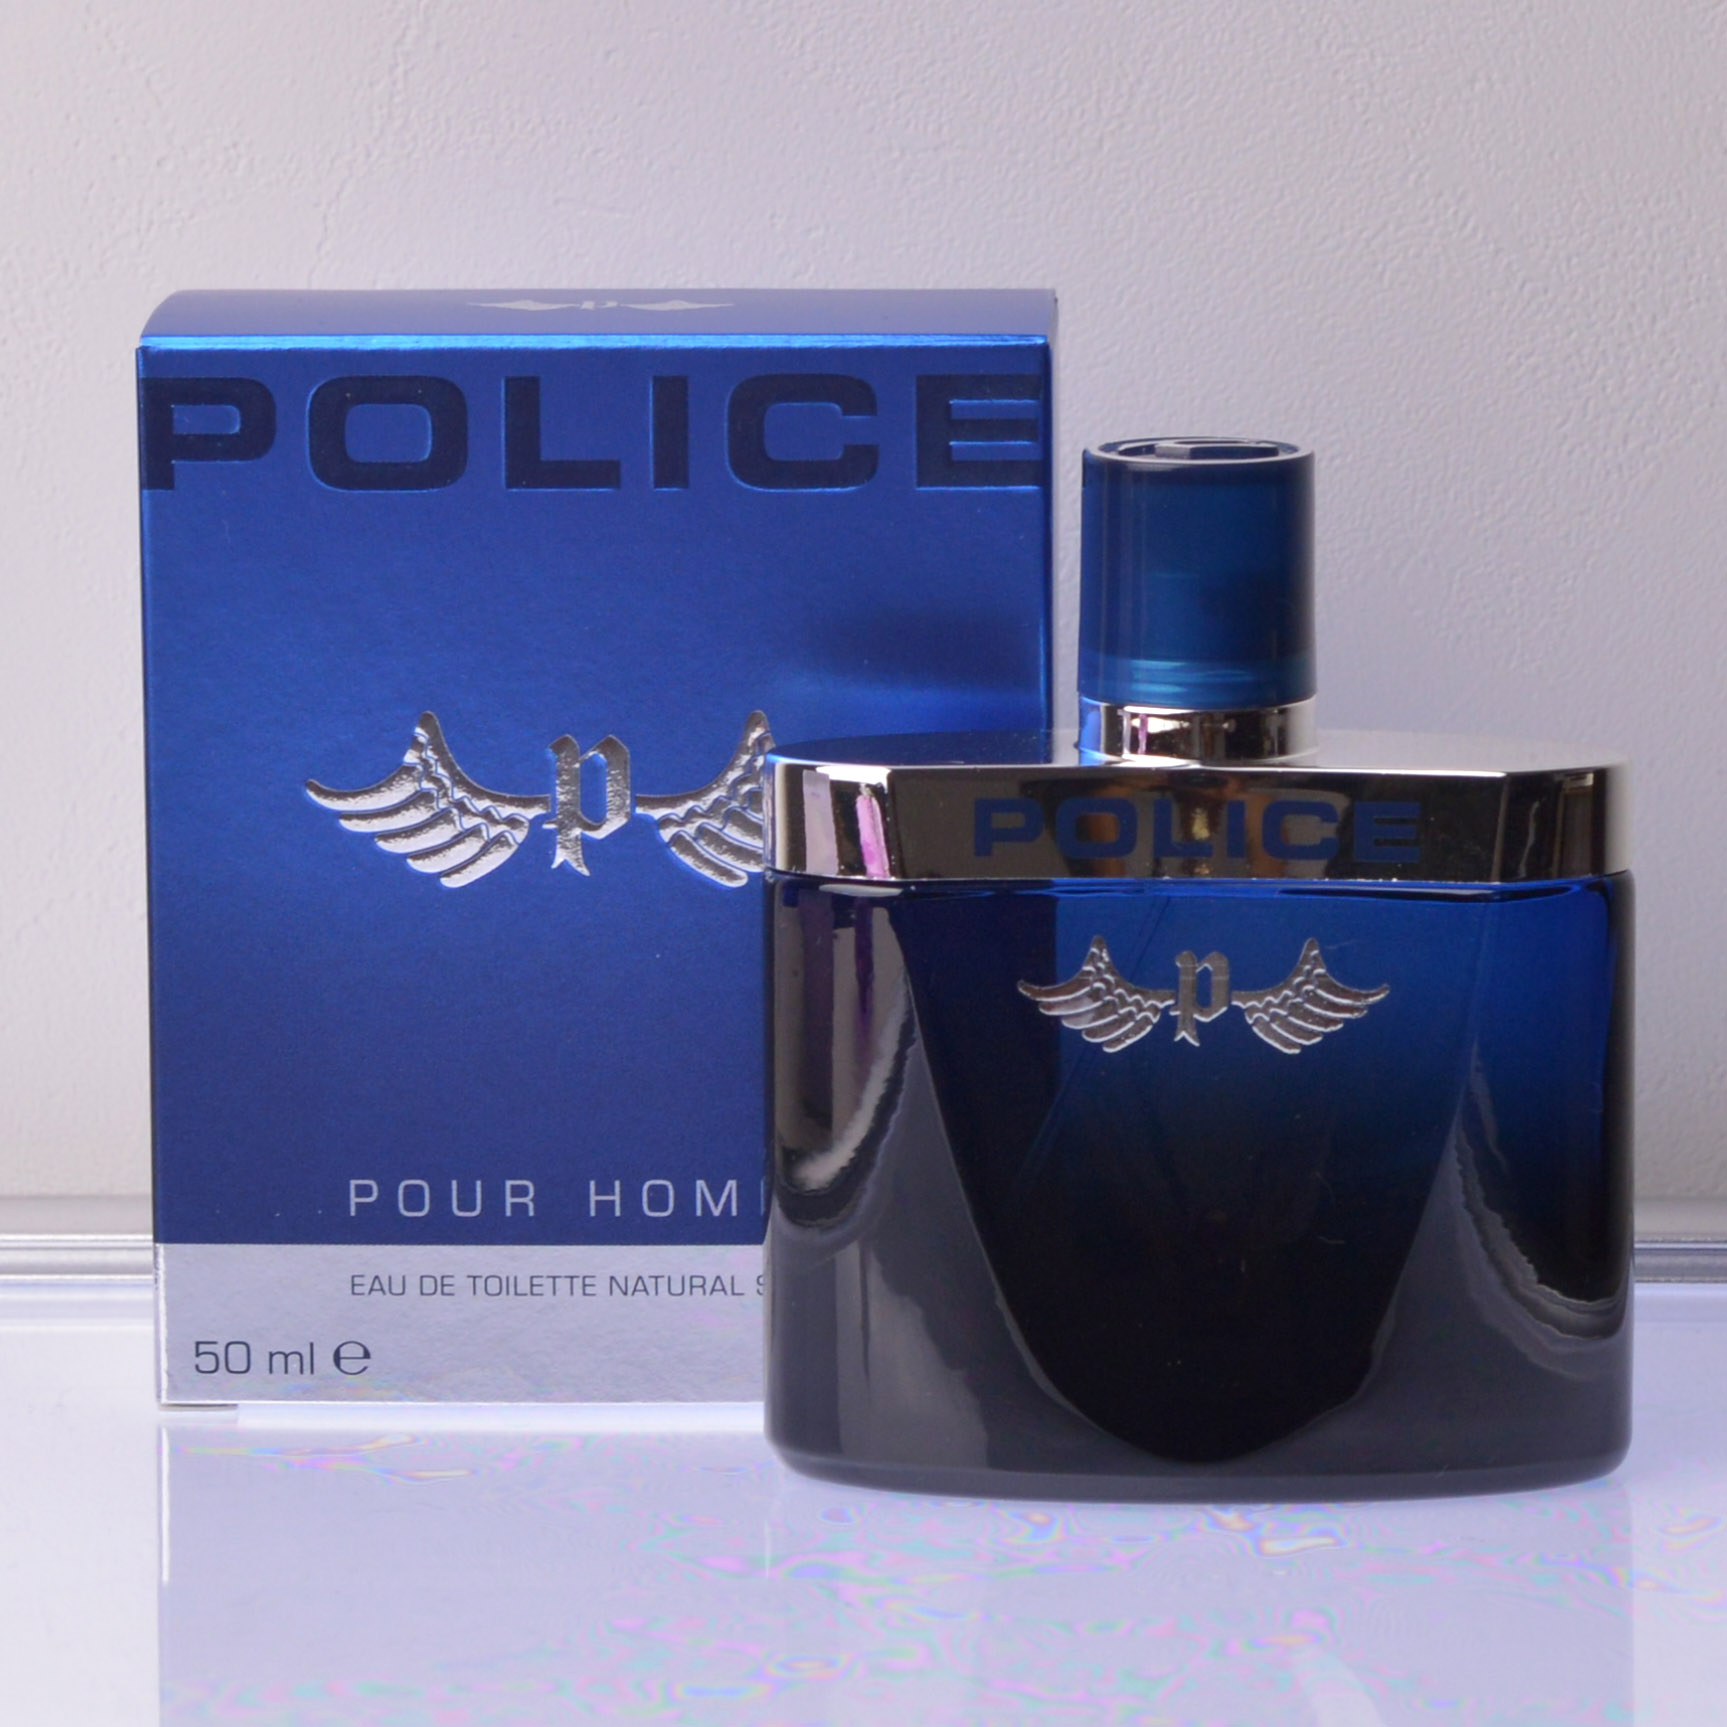 http://www.police.ne.jp/images/police_perfume_to_be_hom_01.jpg